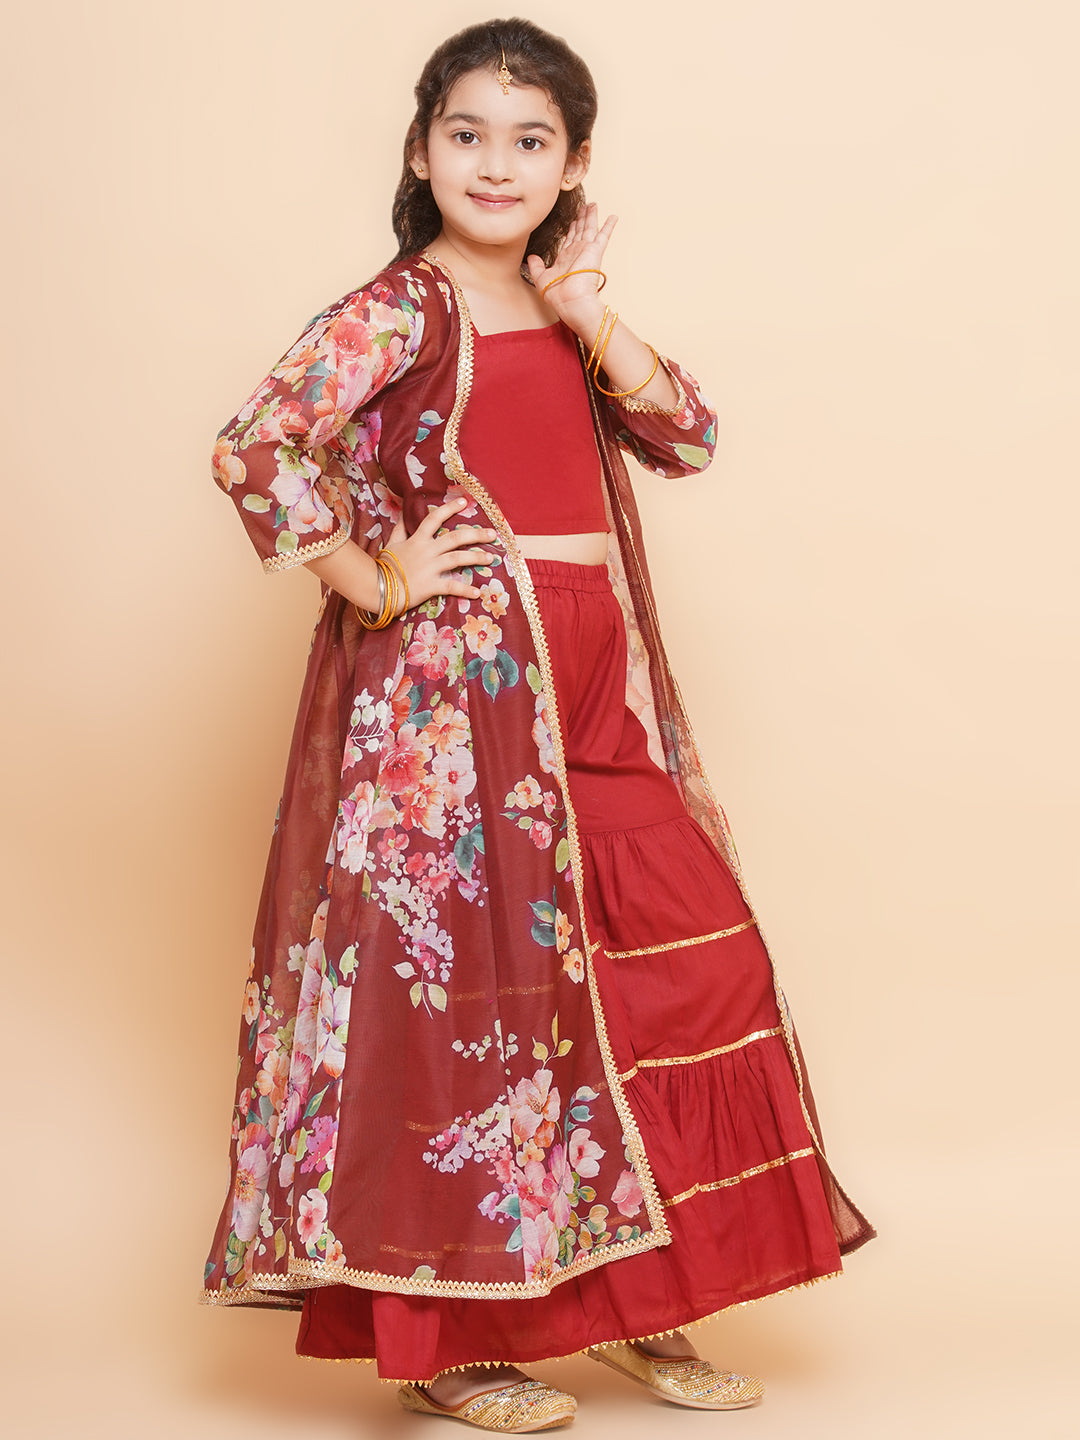 Bitiya by Bhama Girls Maroon Cami Saharara with Floral printed shrug